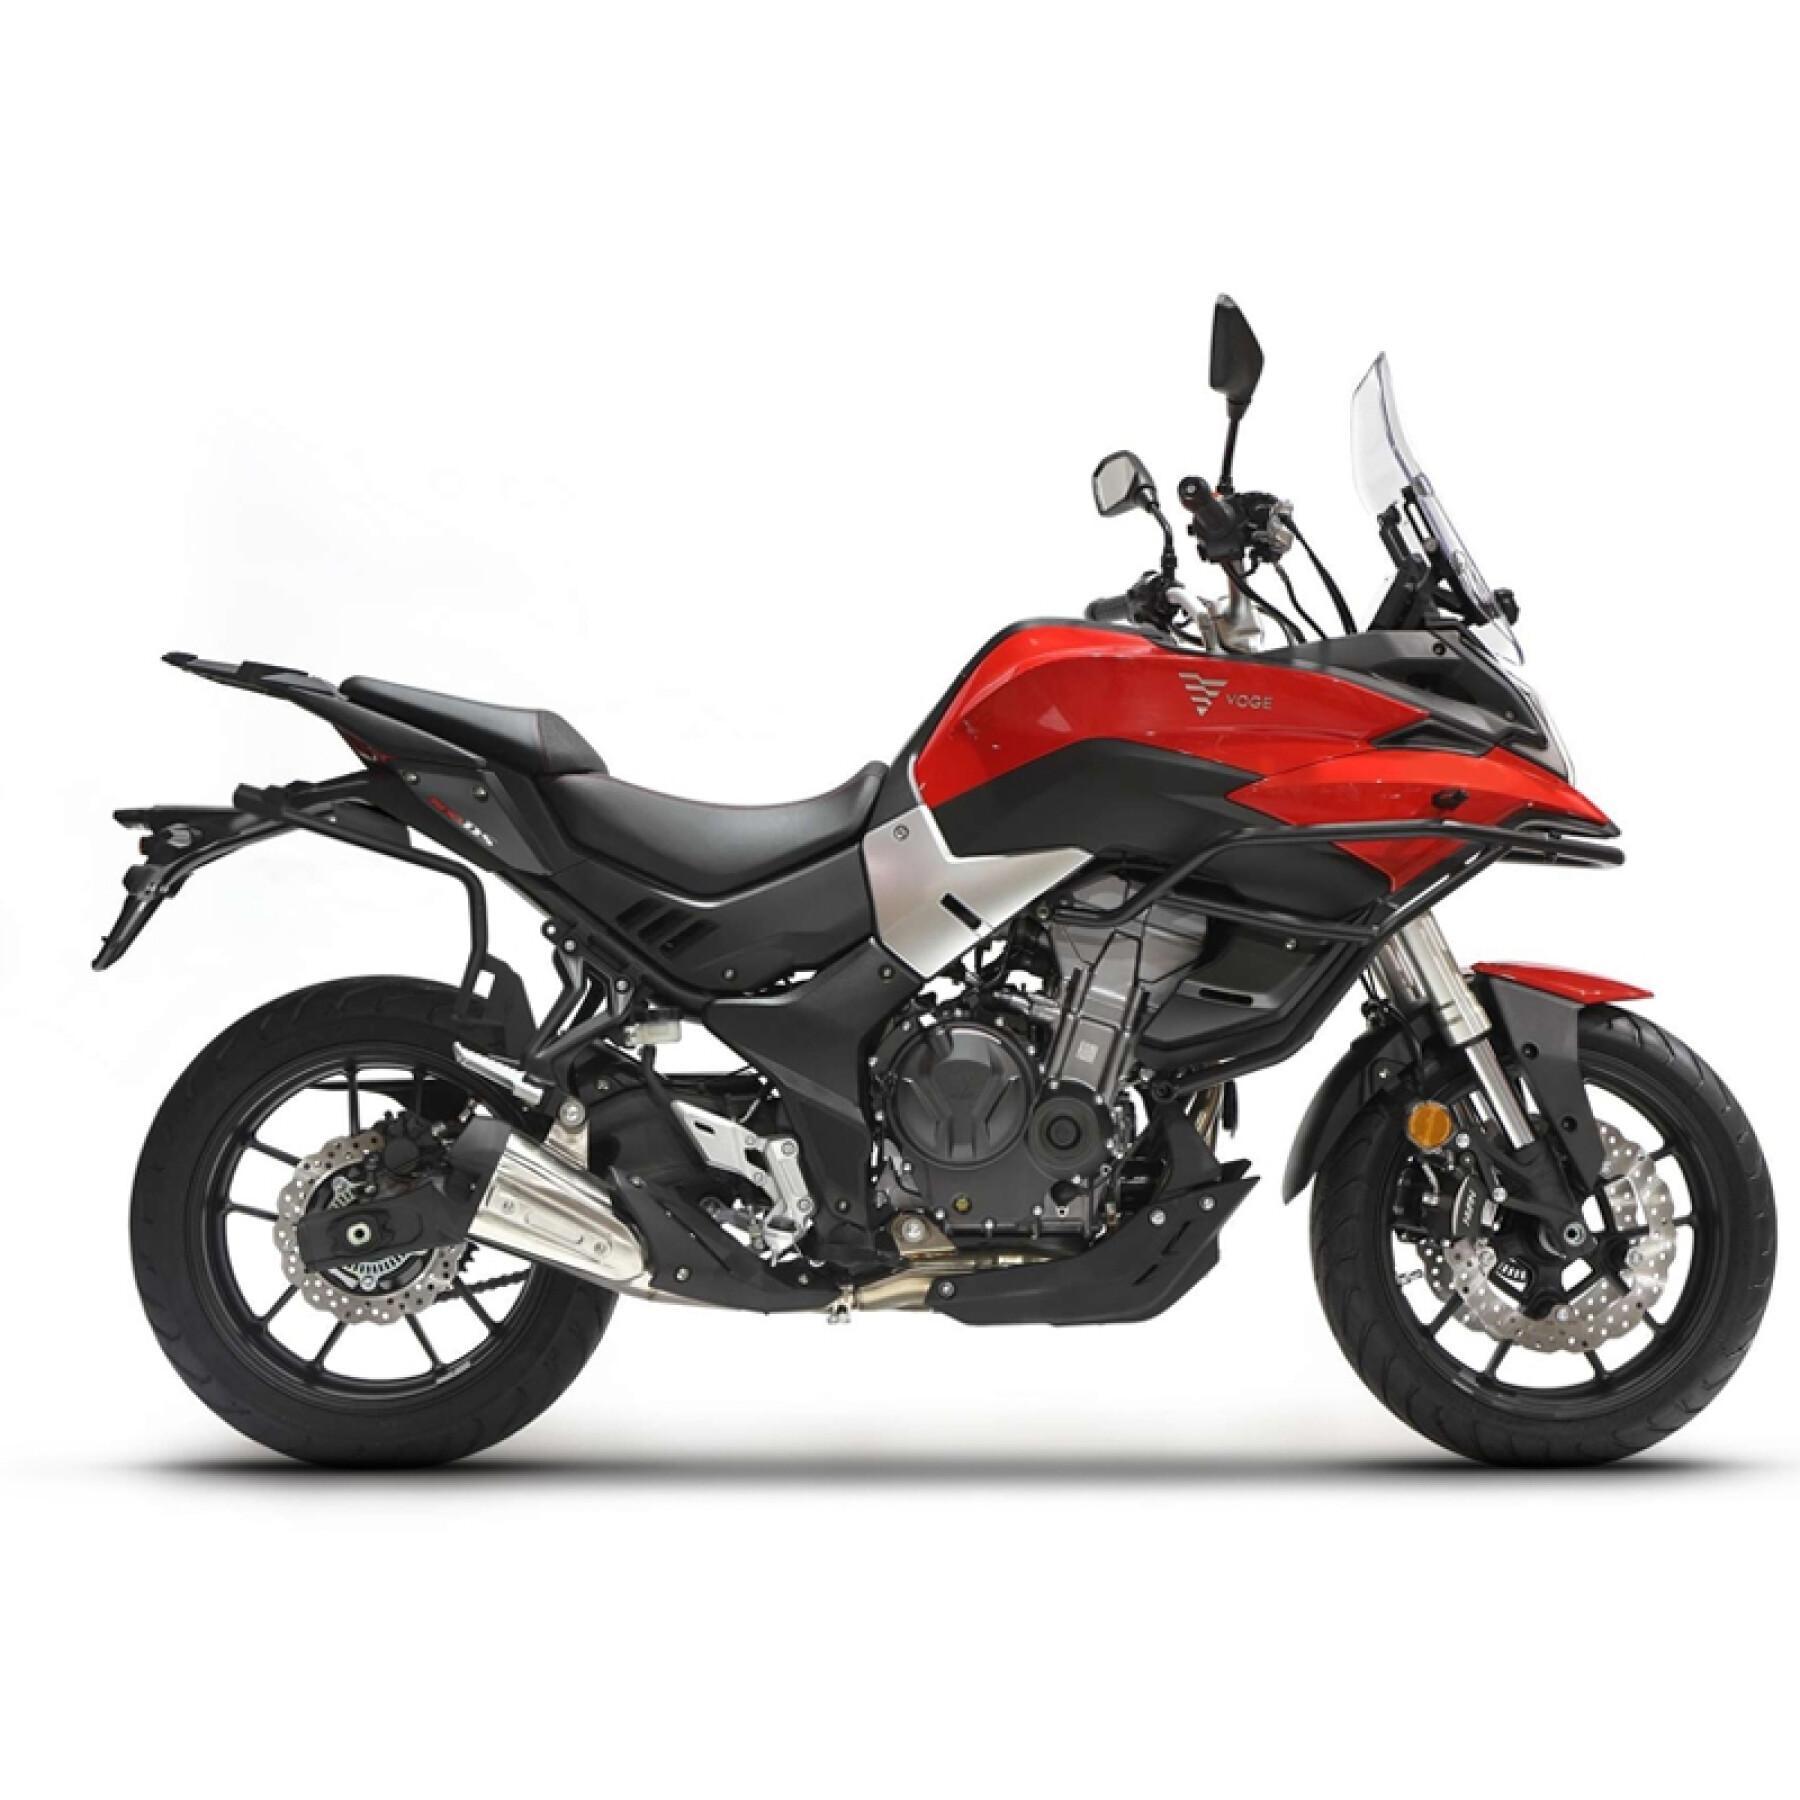 Podpora boczna motocykla Shad 3P System Voge 500Ds 2020-2020